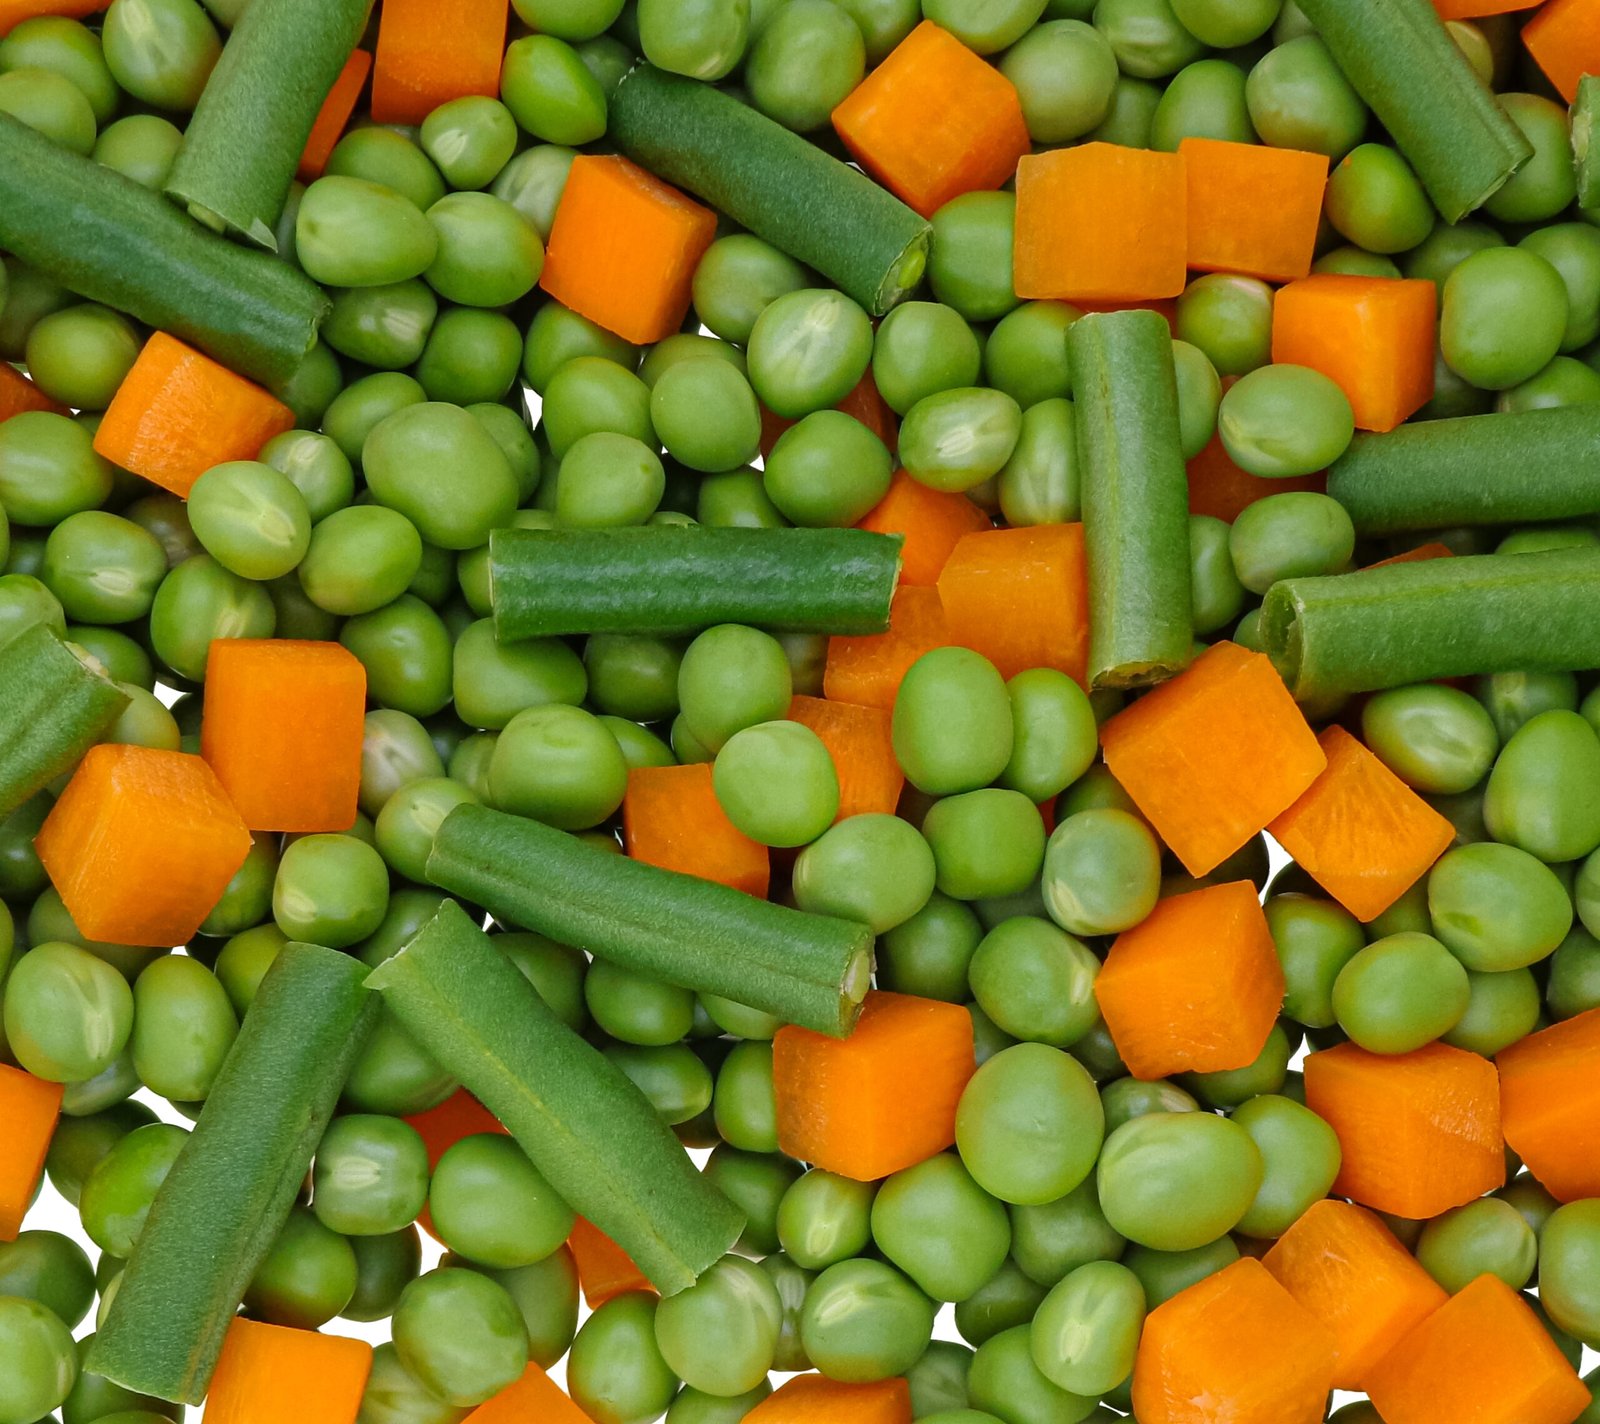 Peas, Carrots & Green beans